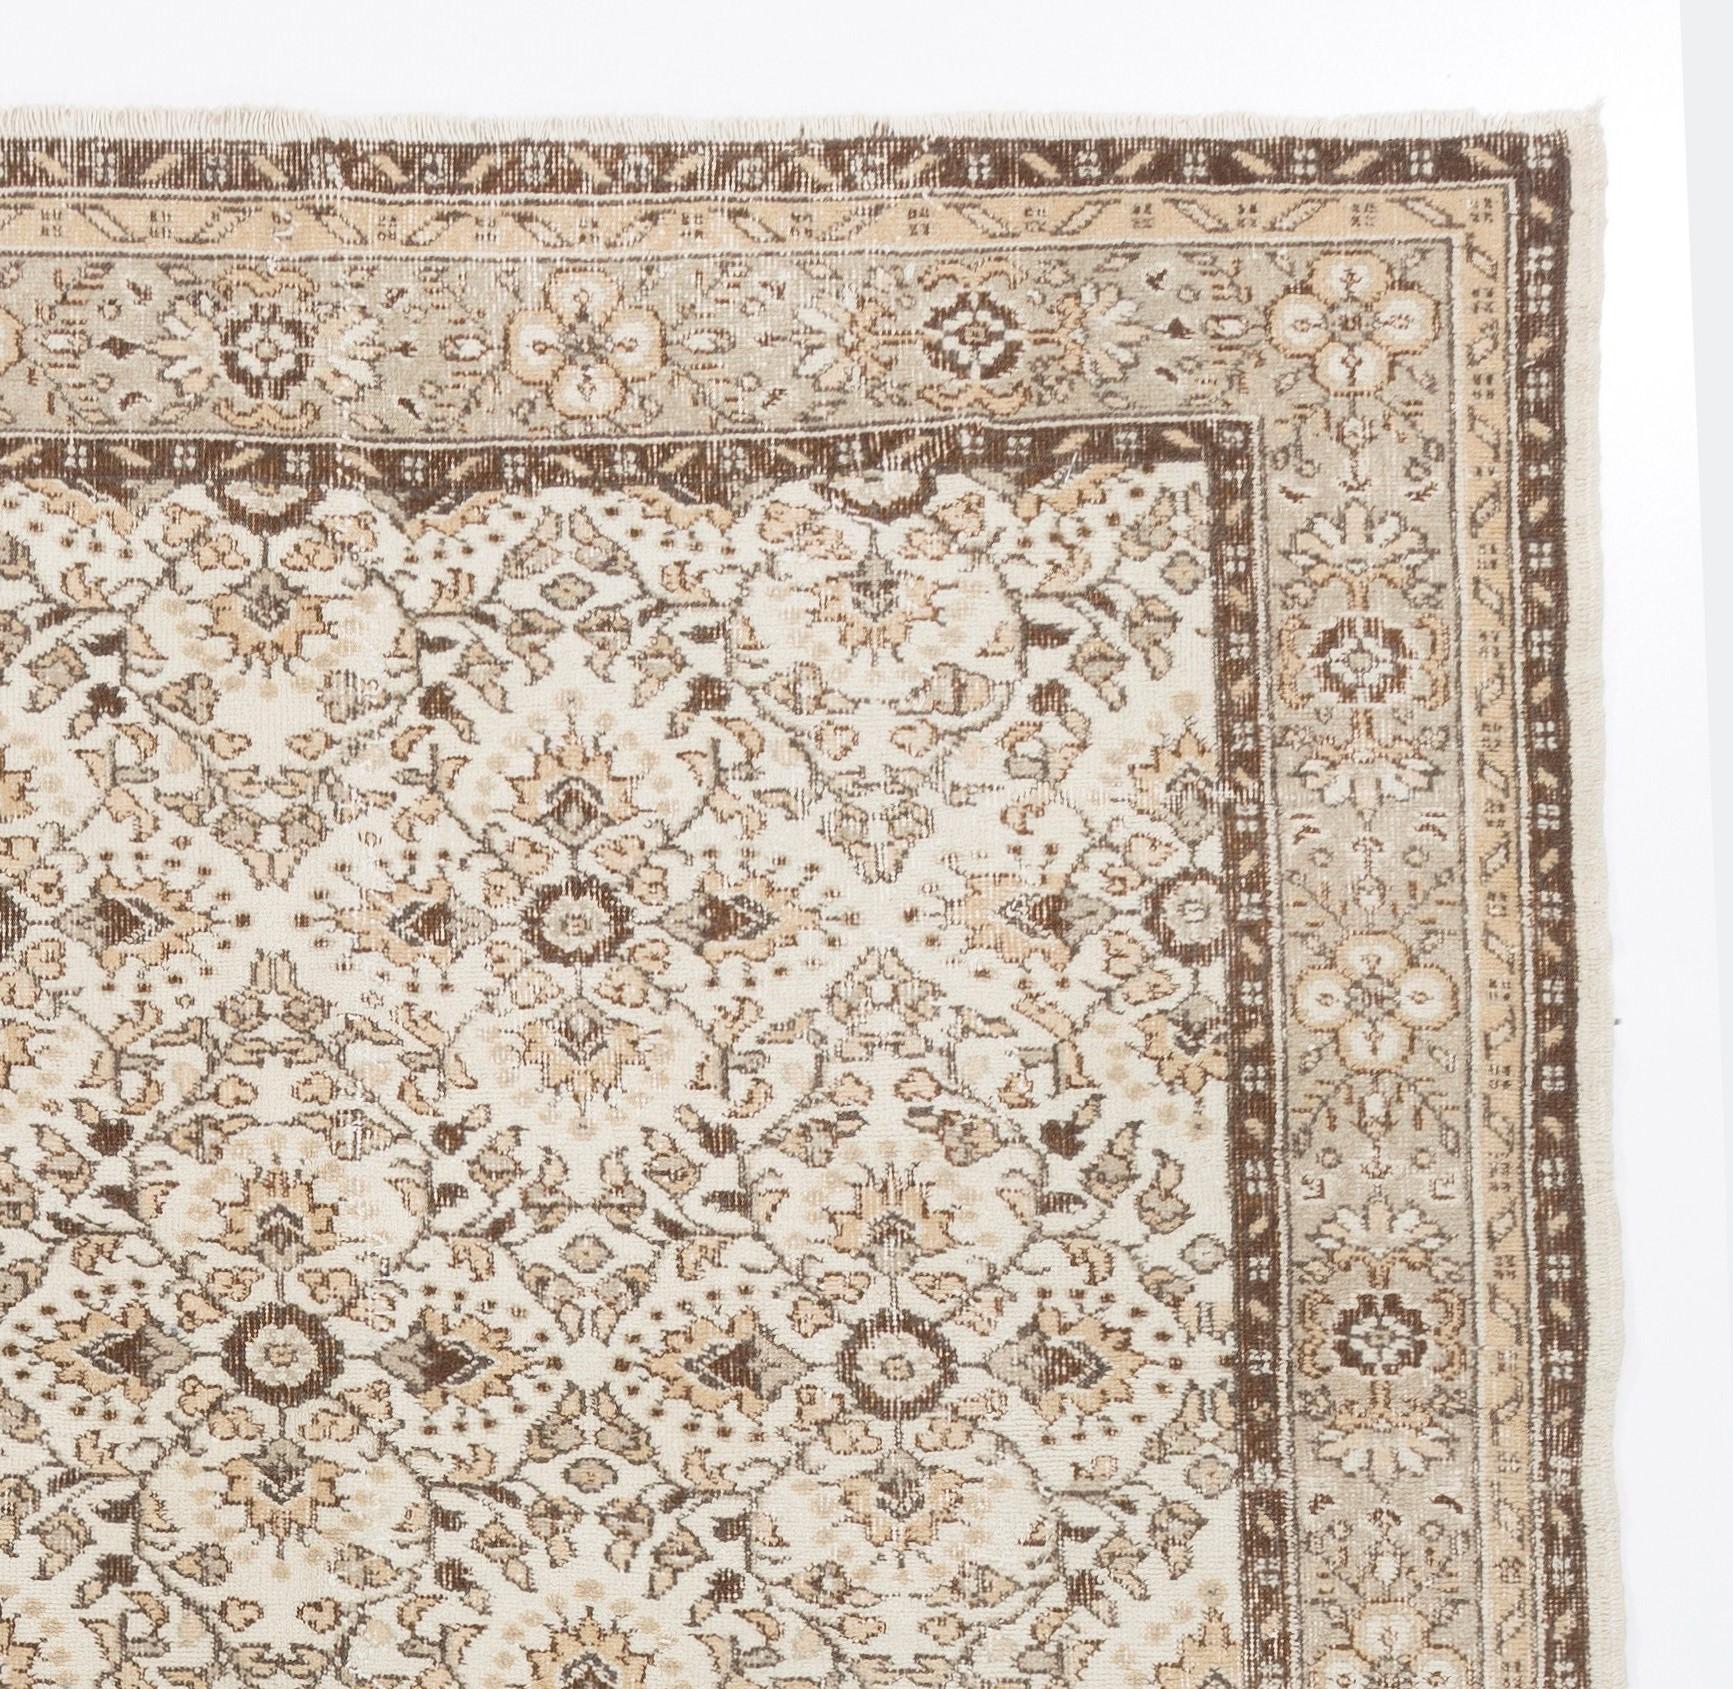 Cotton 6.7x9.8 Ft Vintage Hand-Knotted Turkish Area Rug. Neutral Colors. Floral Design For Sale